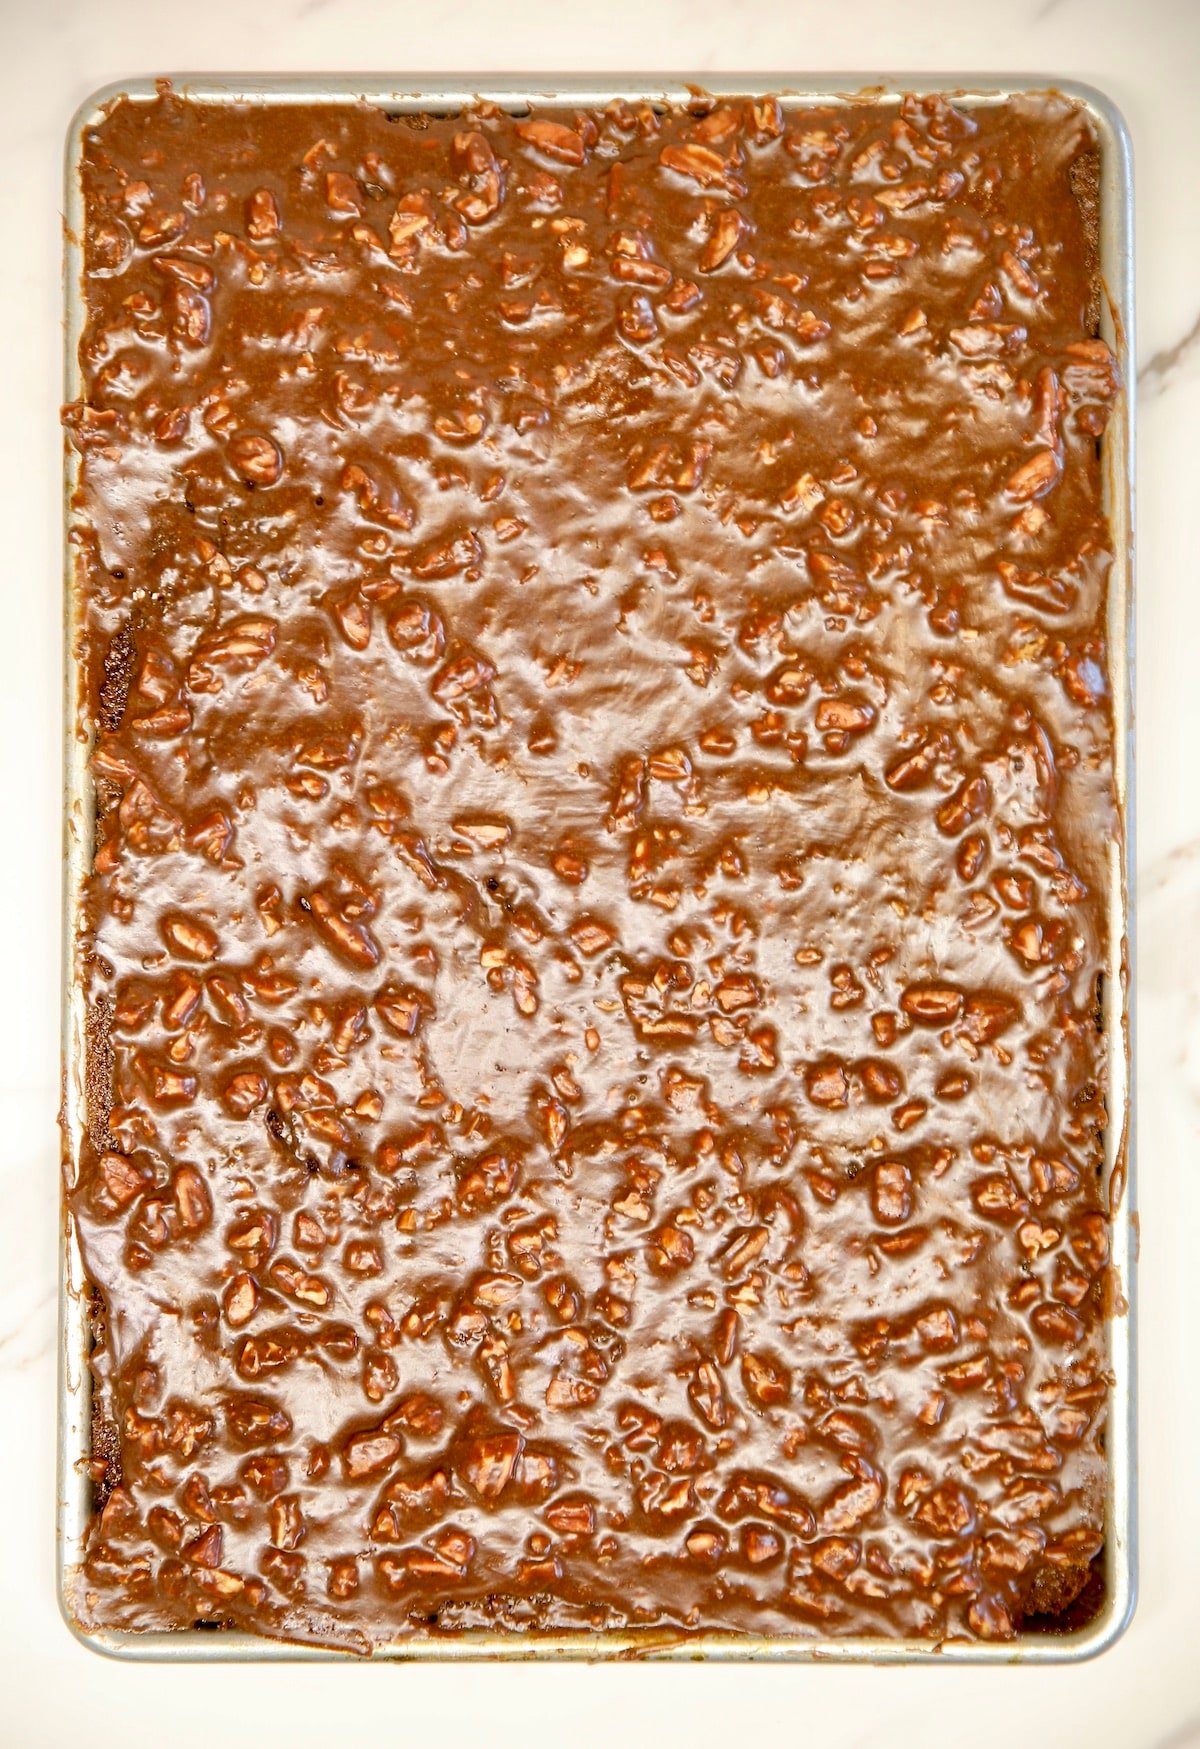 Texas sheet cake with chocolate pecan icing.